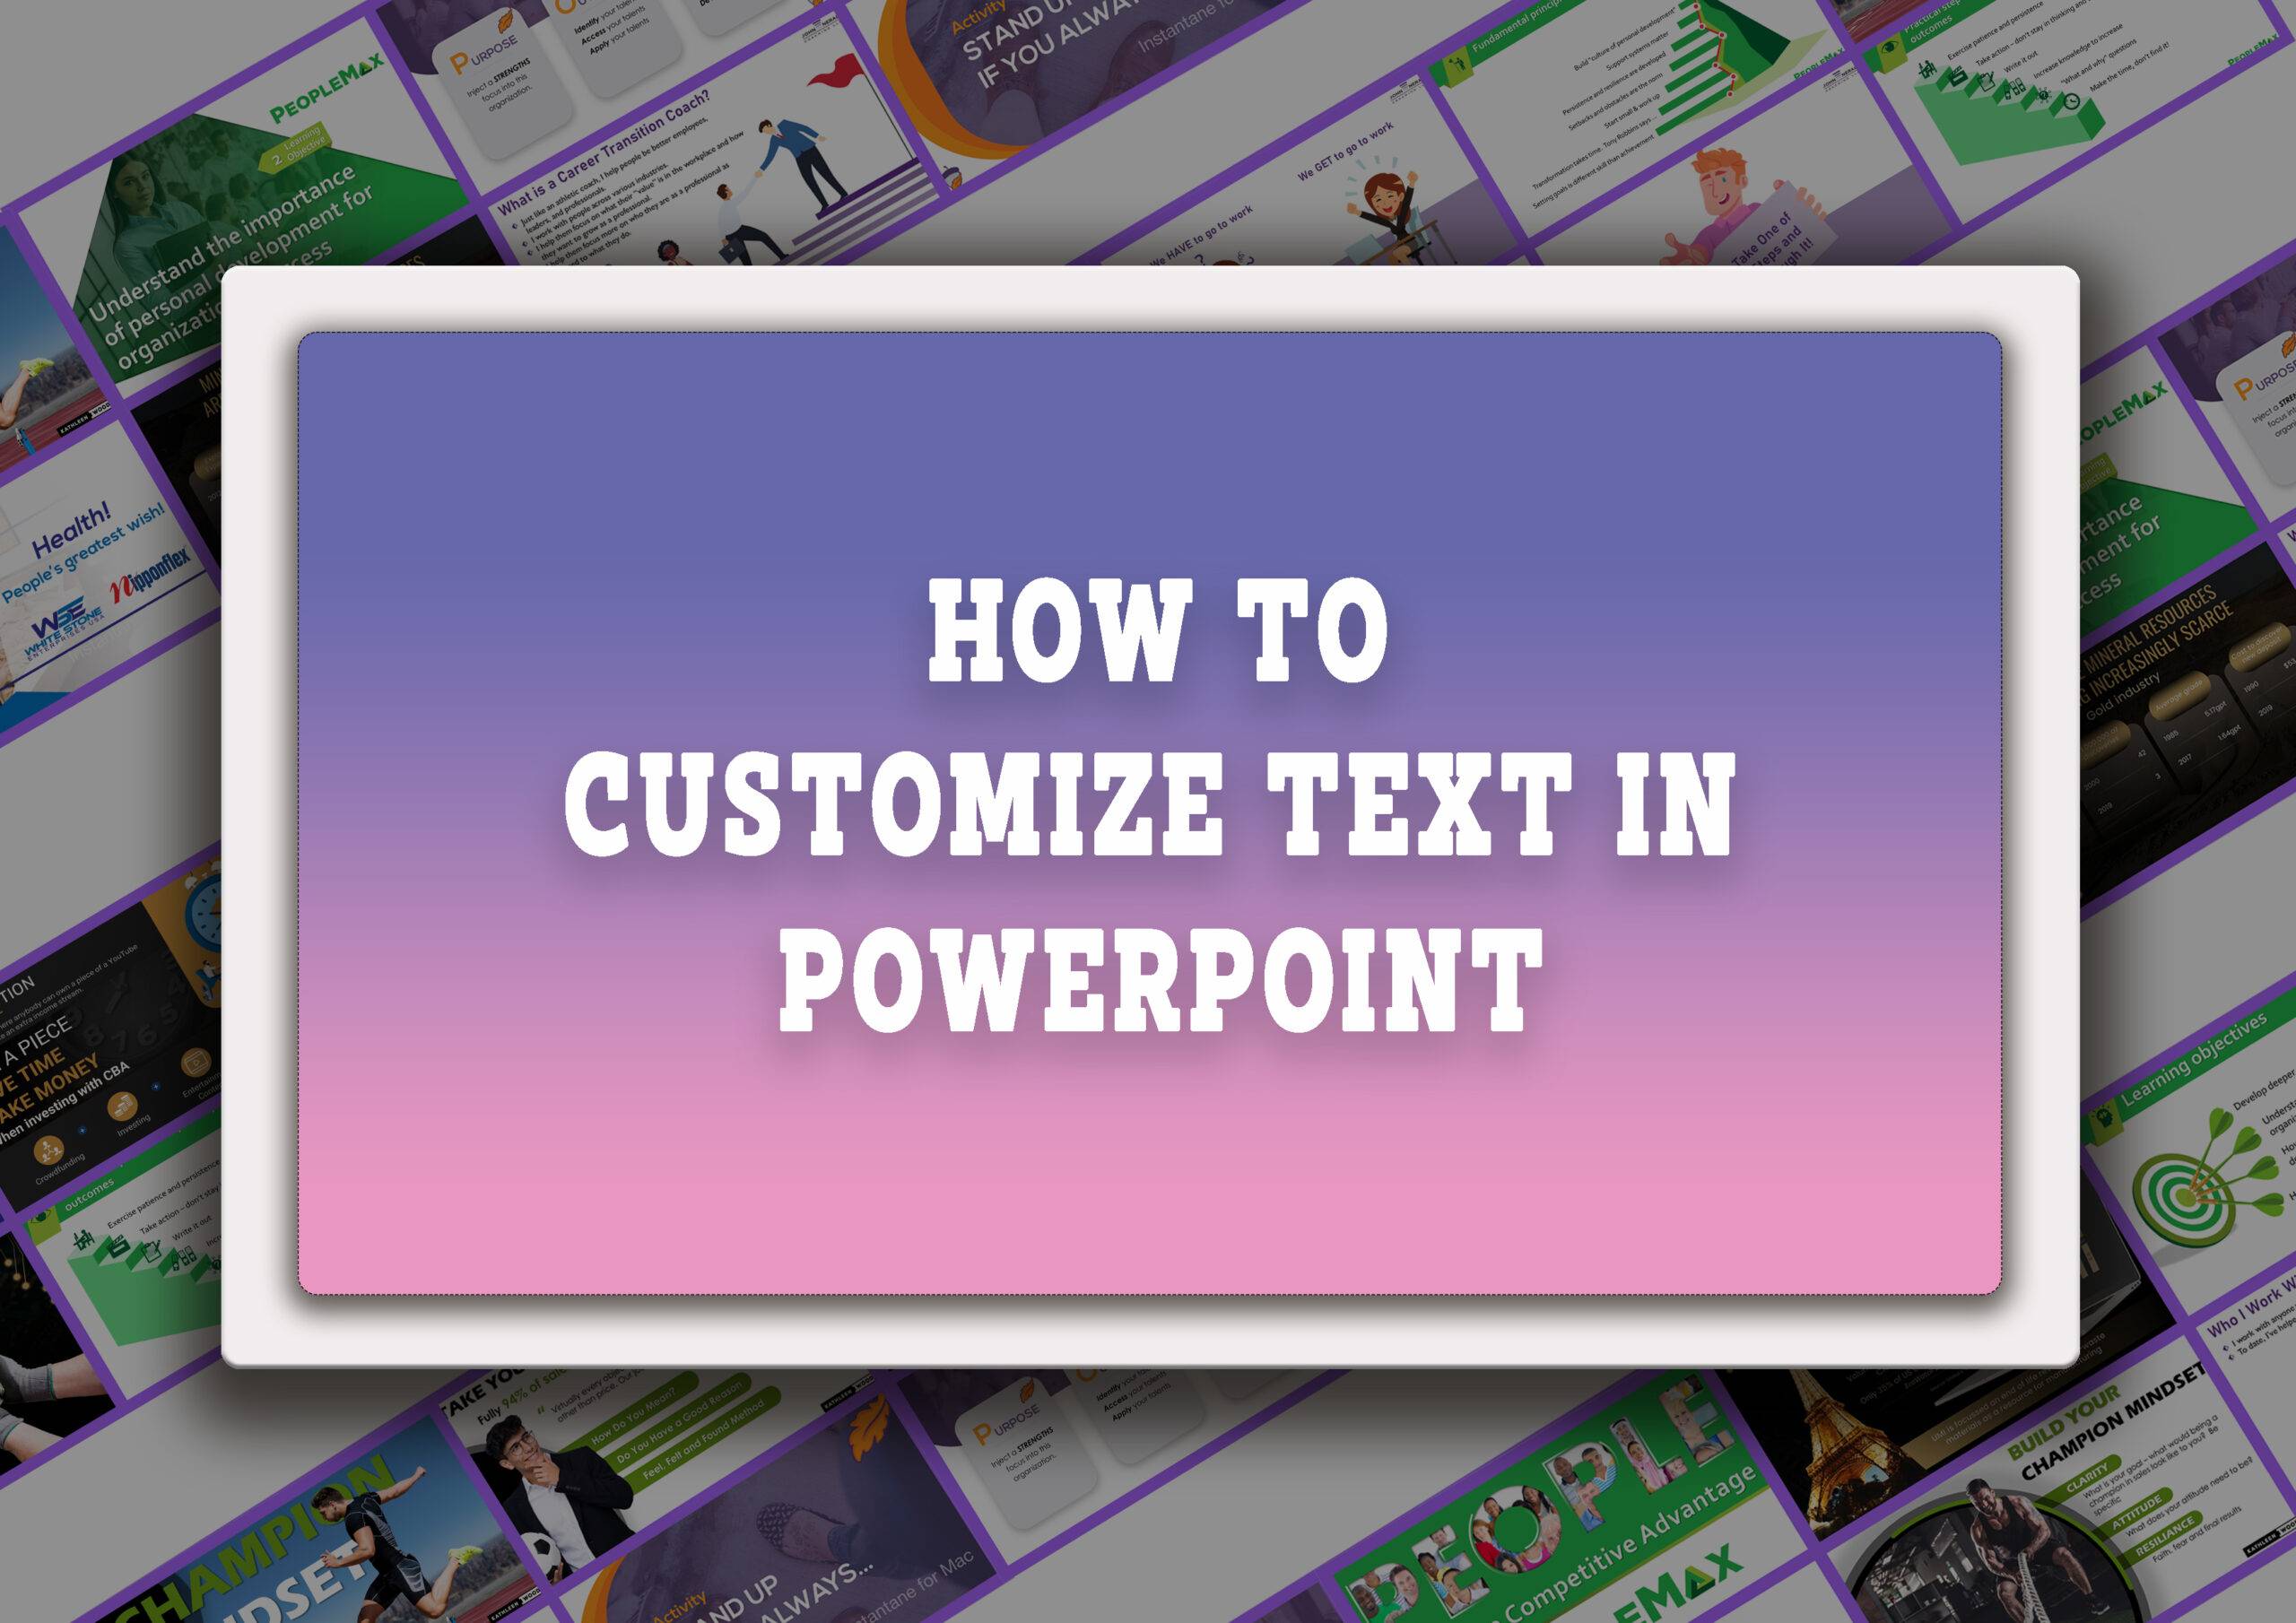 Customizing text in PowerPoint